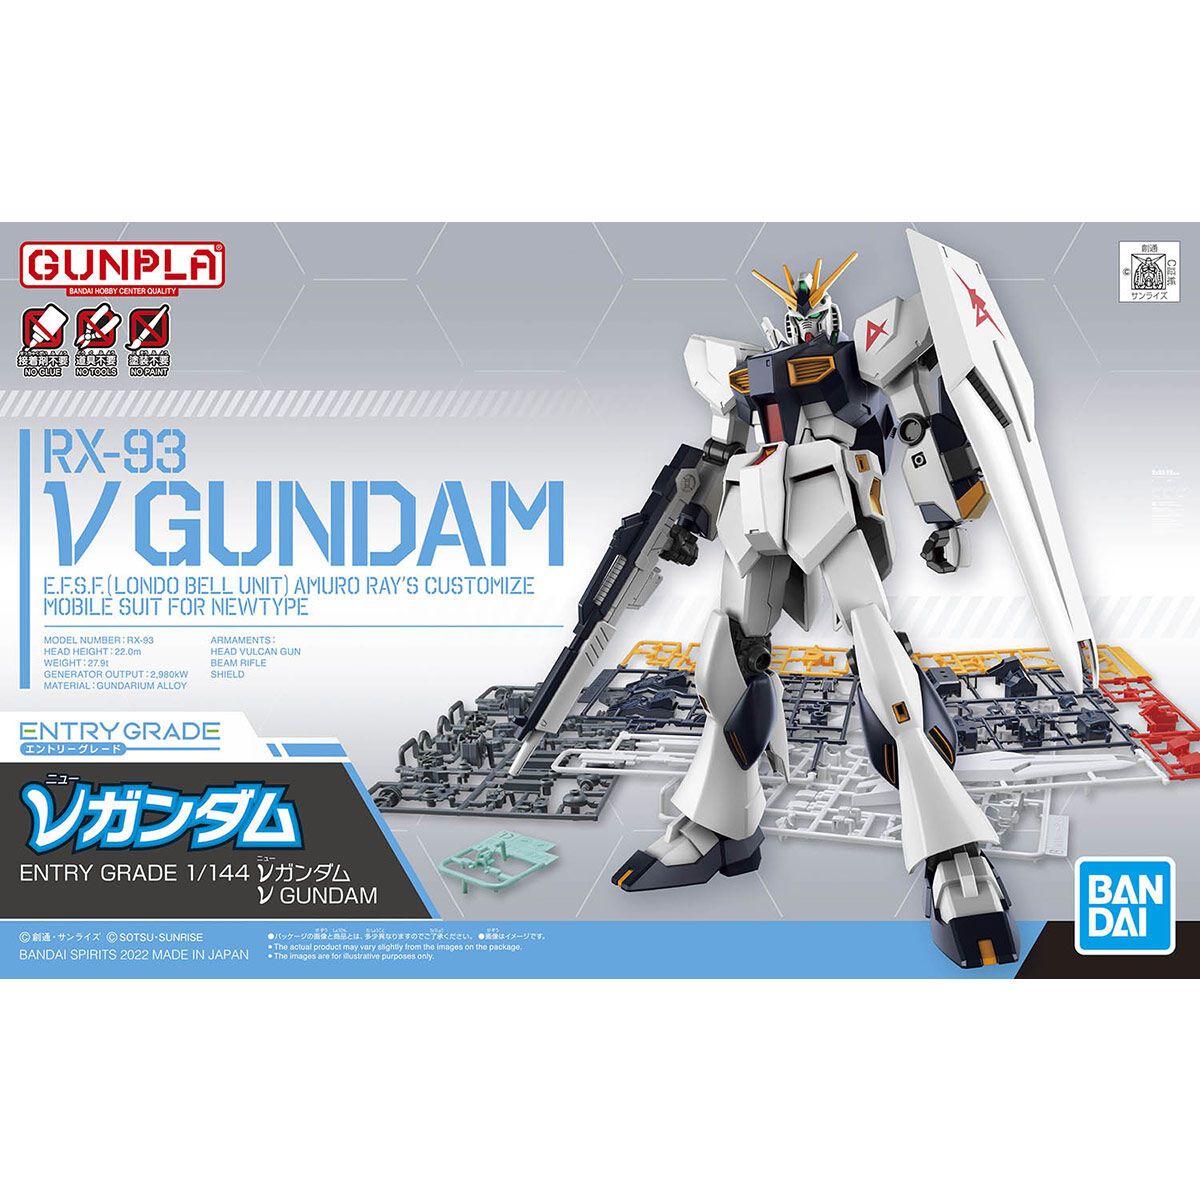 Bandai 1/144 Scale Entry Grade Nu Gundam Model Kit